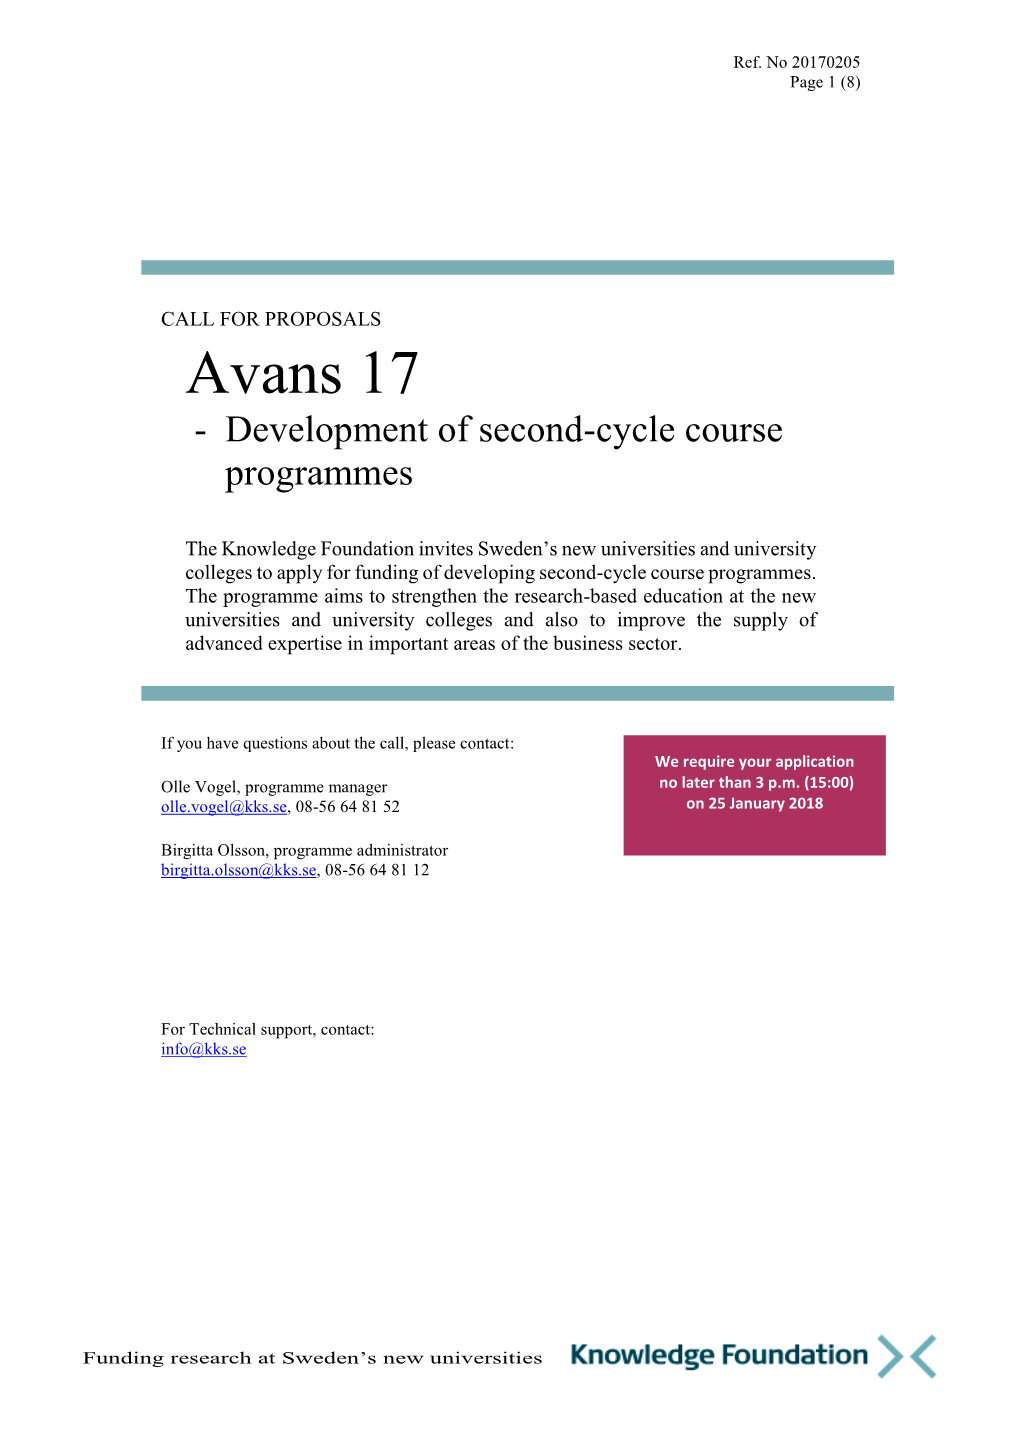 Avans 17 - Development of Second-Cycle Course Programmes